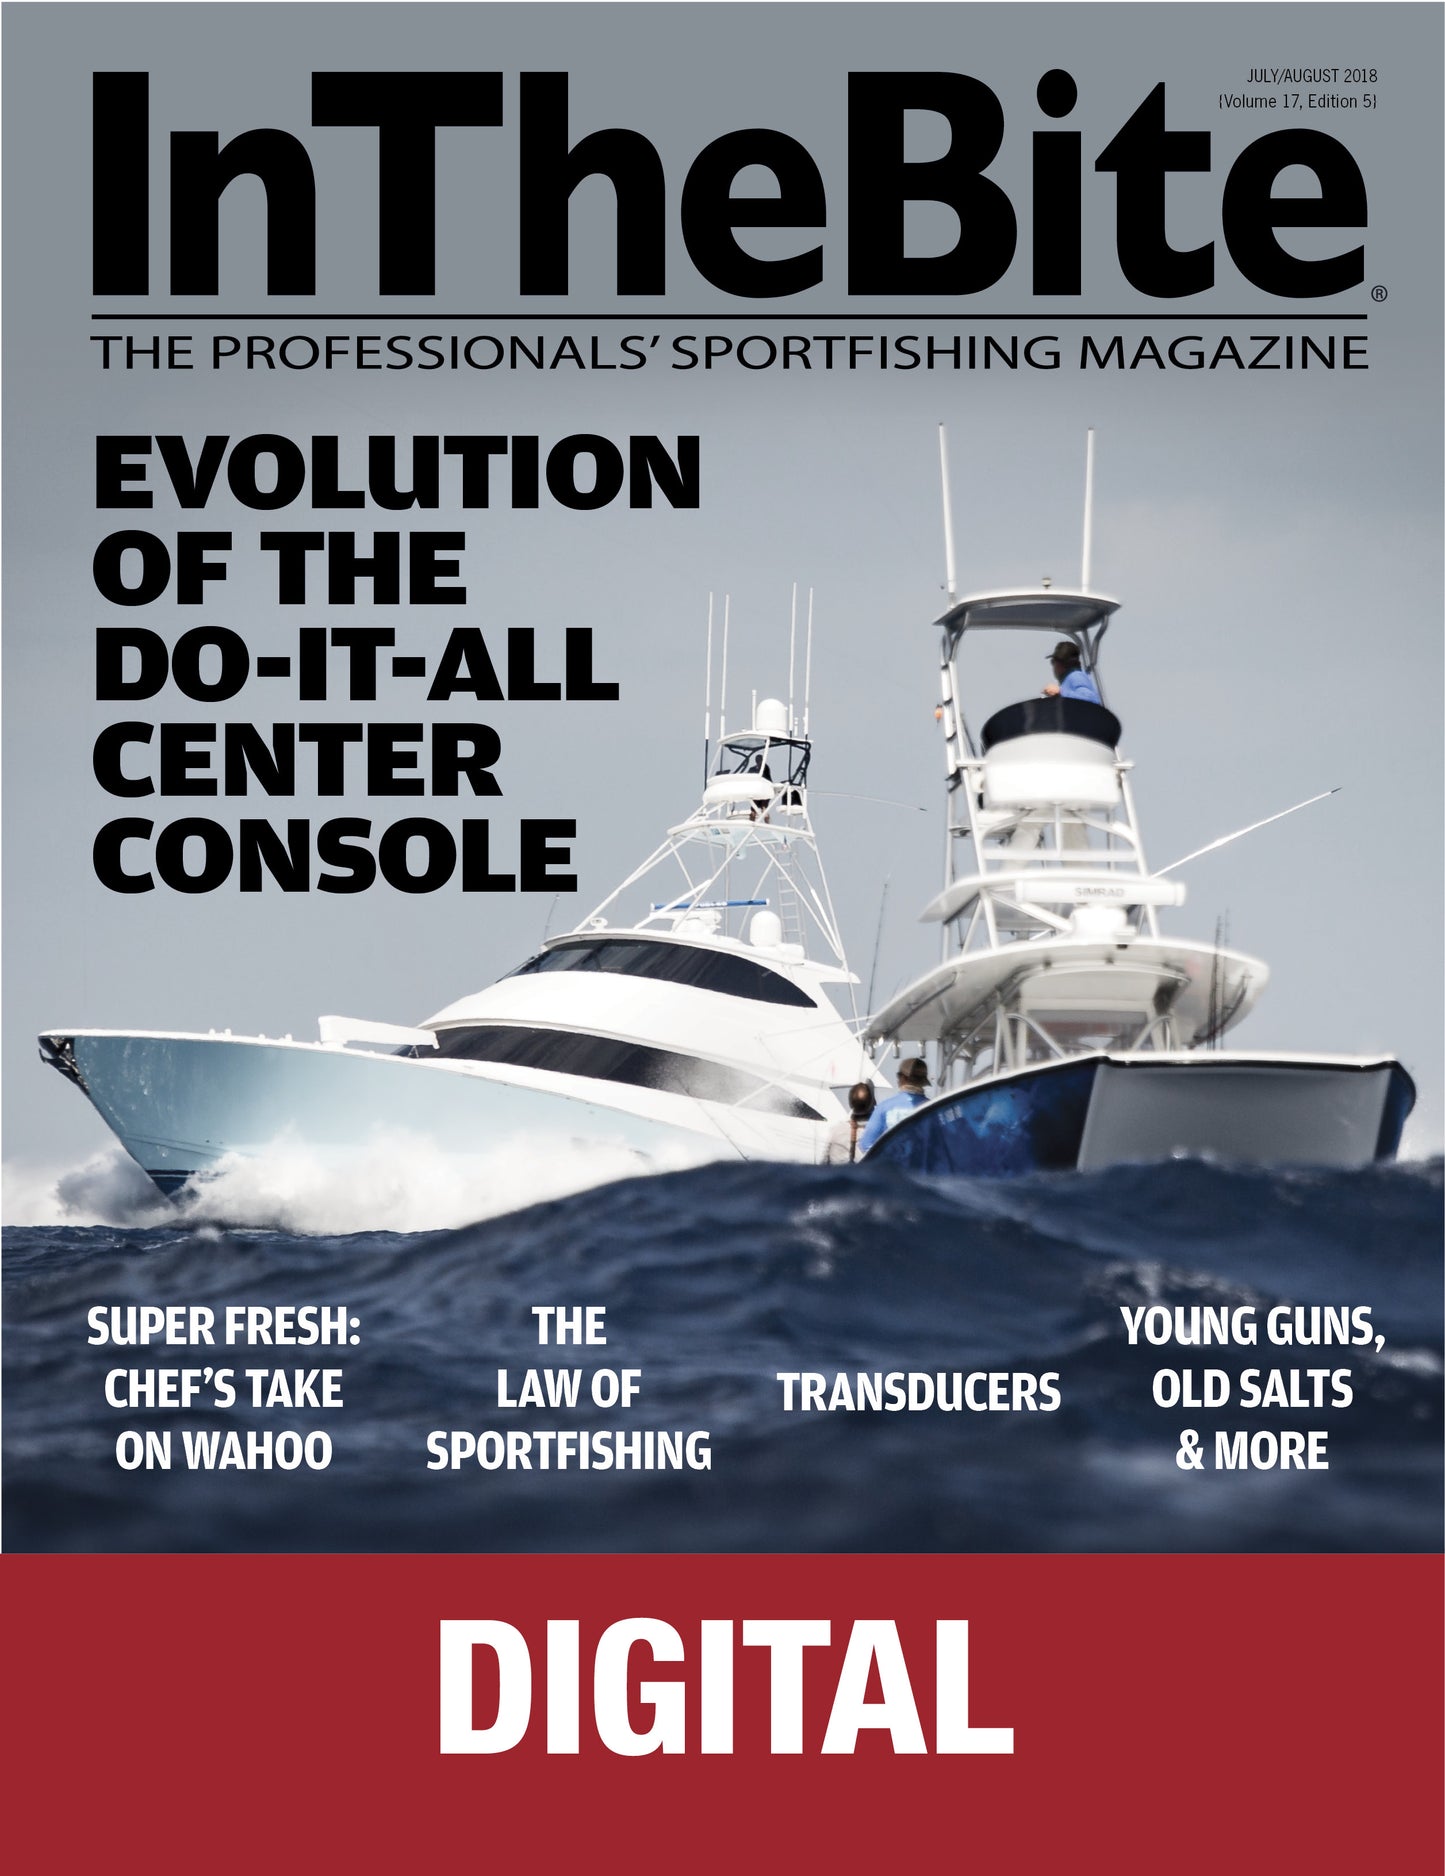 InTheBite Volume 17 Edition 05 - July/August 2018 - Digital Edition